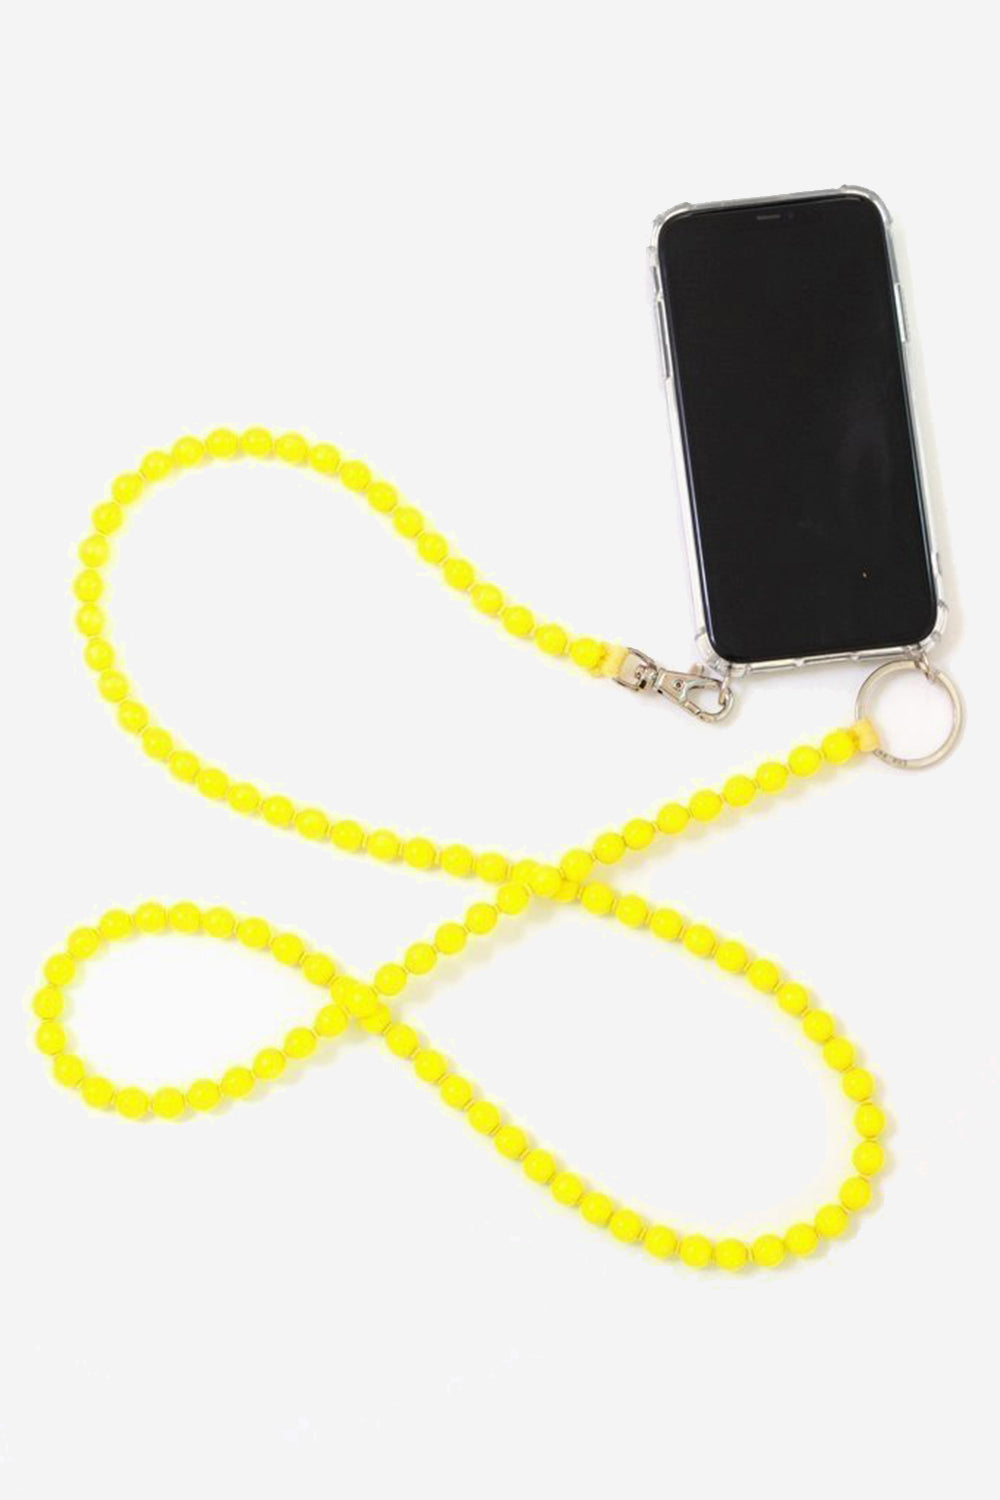 Phone Necklace, neon yellow